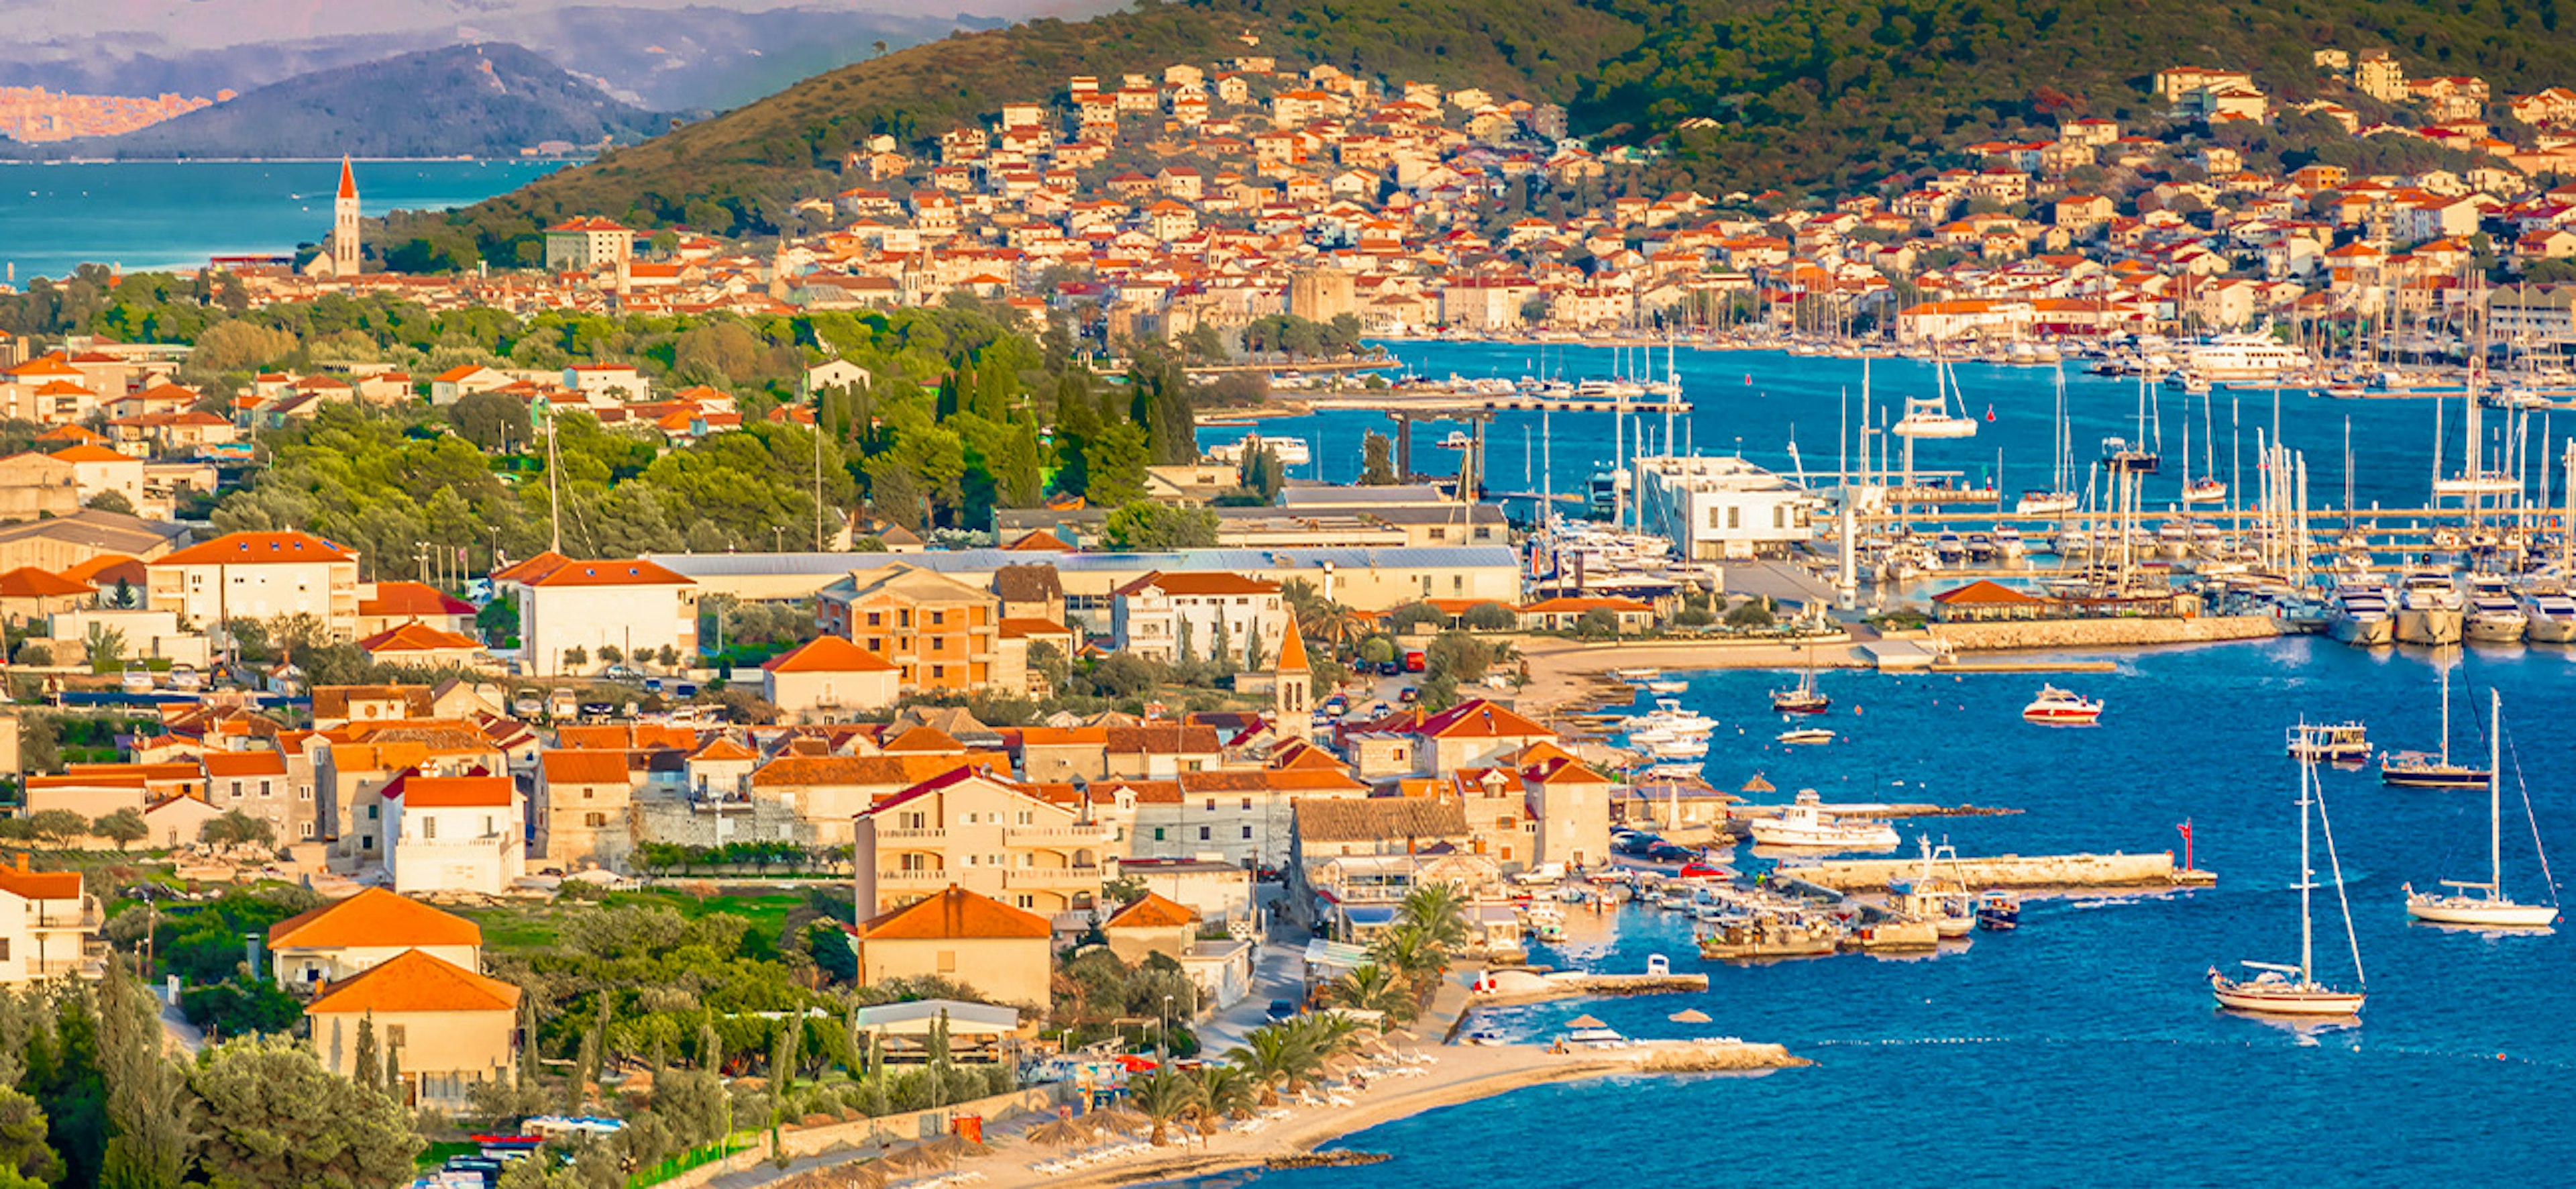 Aerial view at town Trogir, a small tourist town in a suburb of Split, Dalmatia region in Croatia.